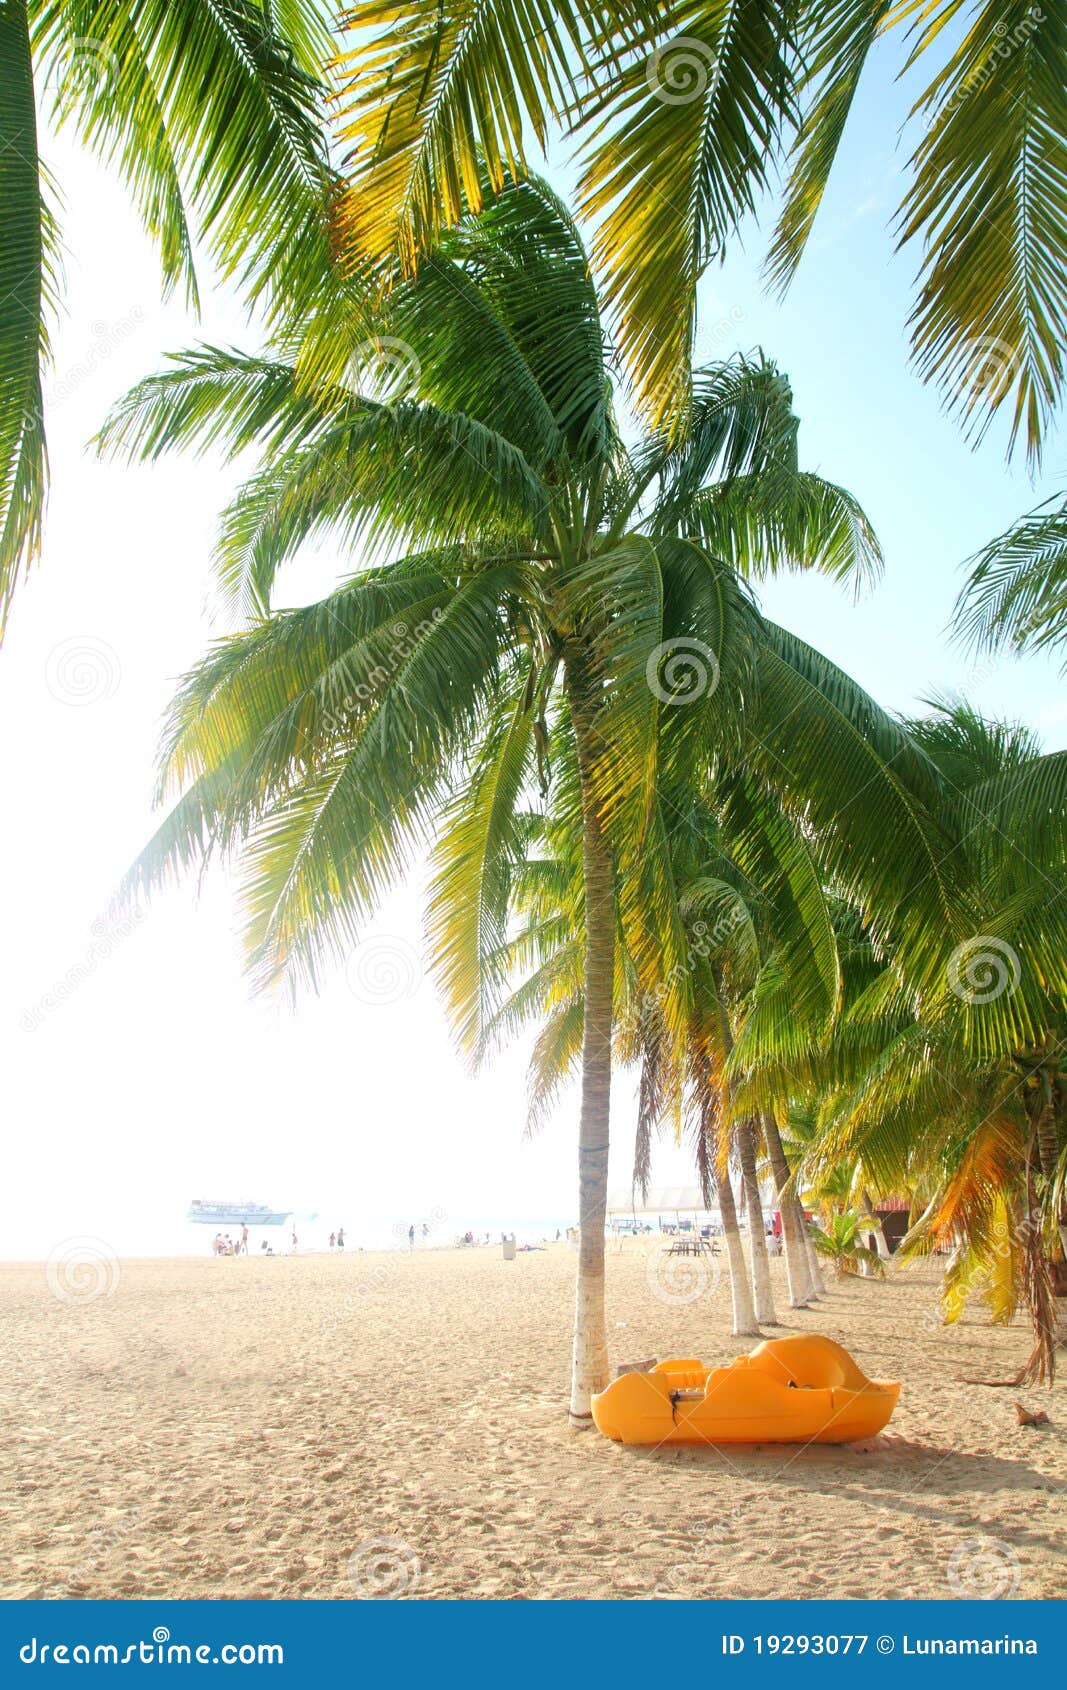 isla mujeres north beach tropical palm trees